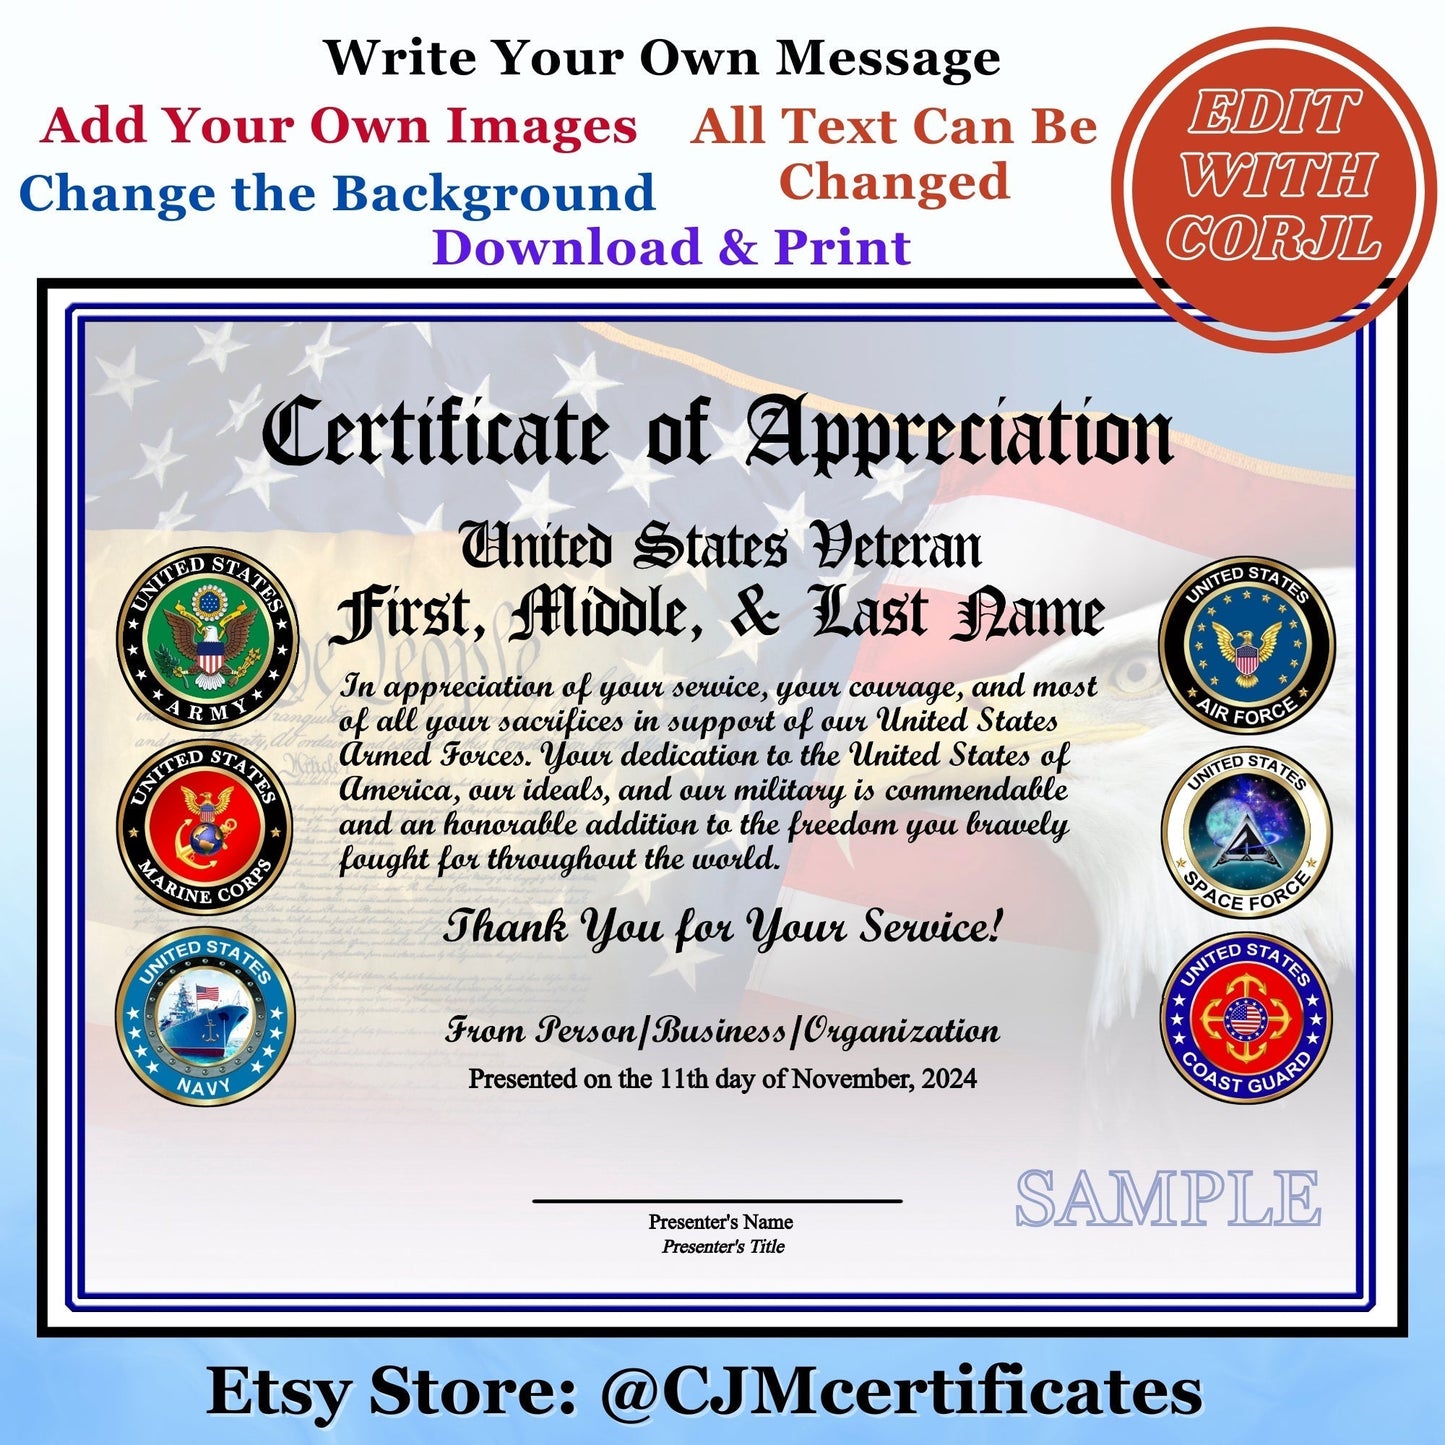 All Services Veteran Appreciation Certificates (60 Pack)